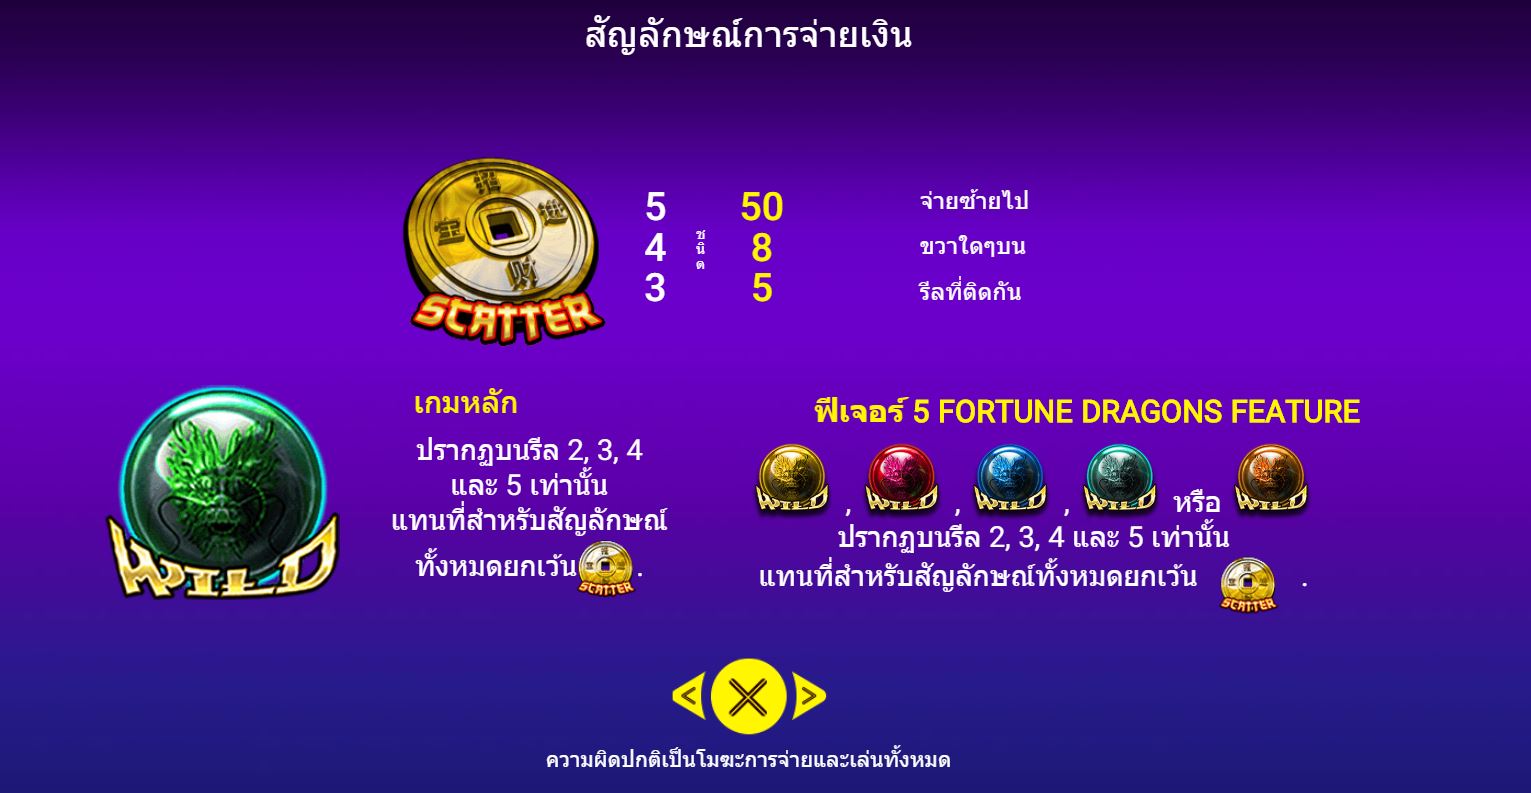 slot สล็อต  SG 5 Fortune Dragons - รางวัลใหญ่ 19500 เท่าที่กำลังรอคุณอยู่นะ  ลงทะเบียนรับทันที200 pay69 4